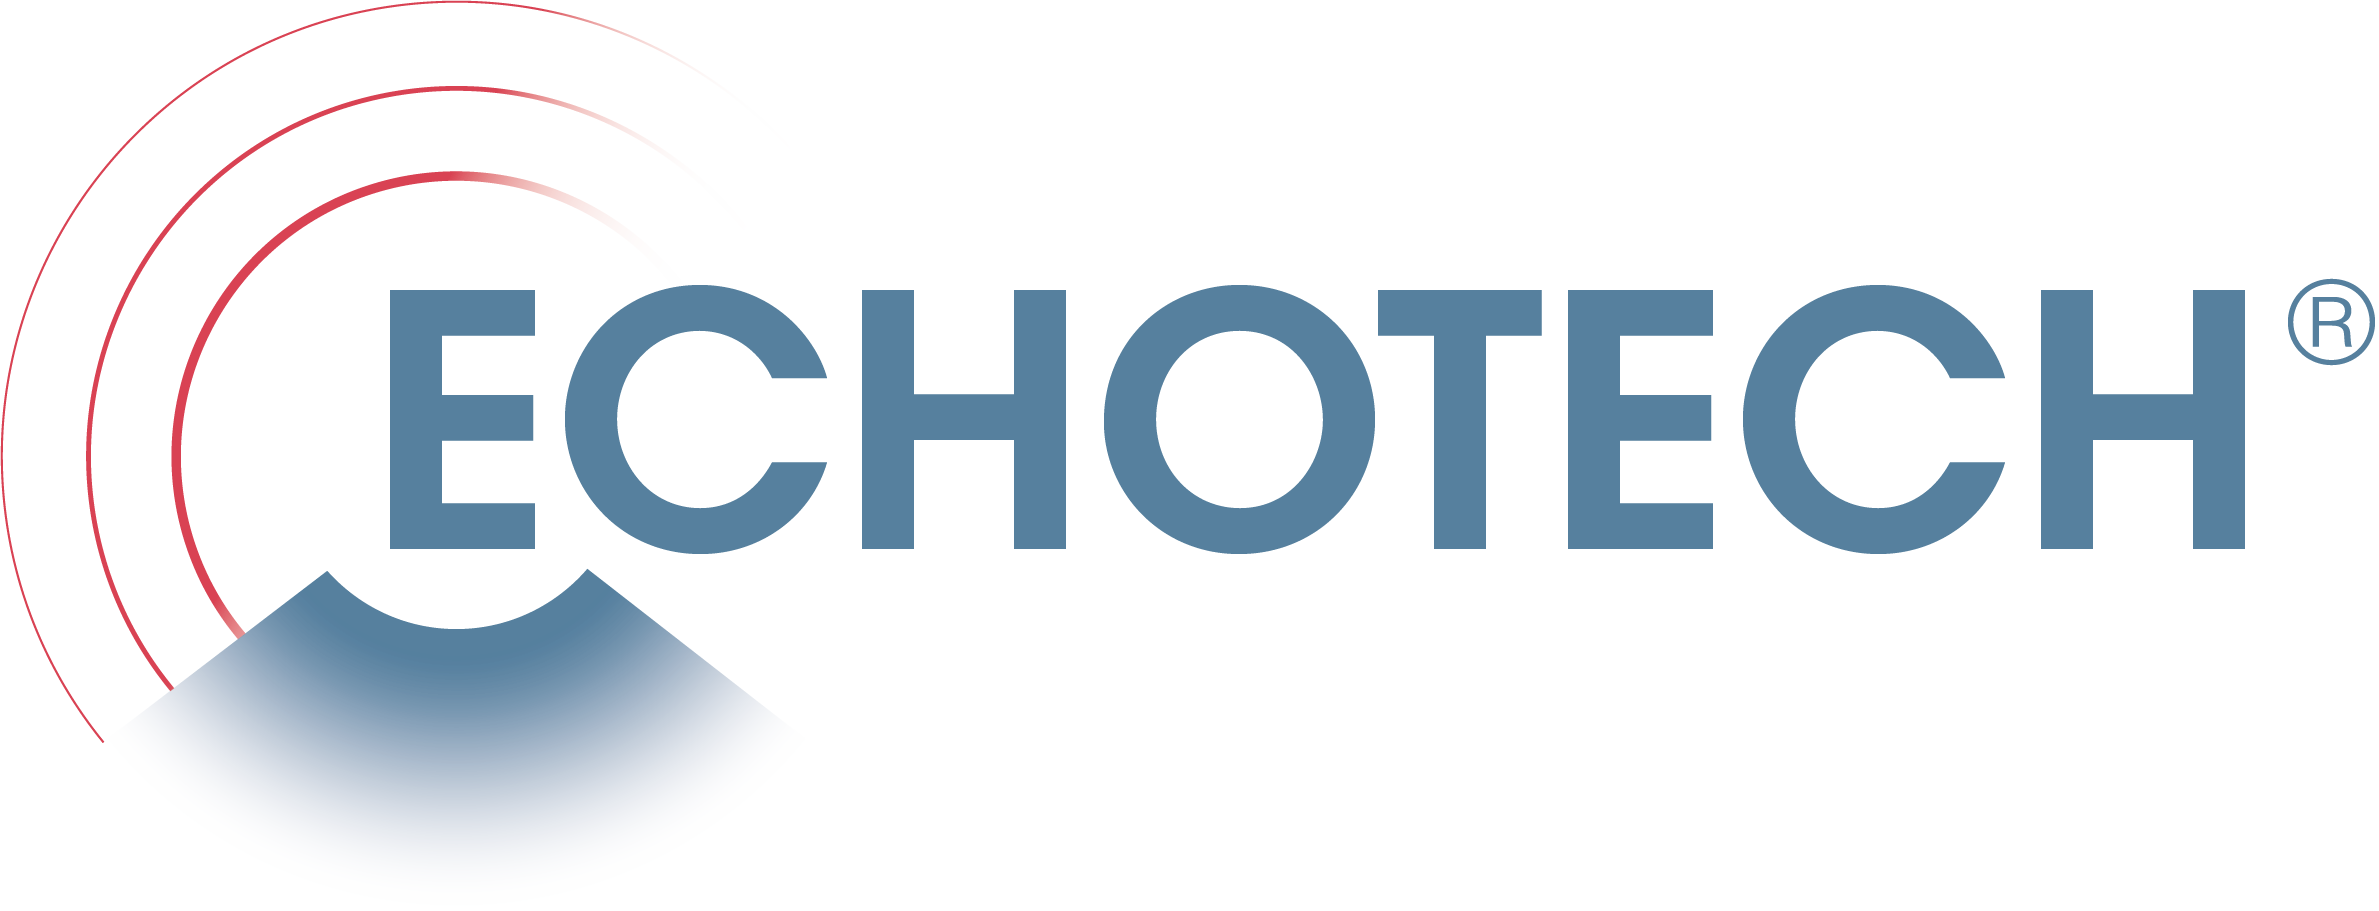 Core Technologies: Echotech Product